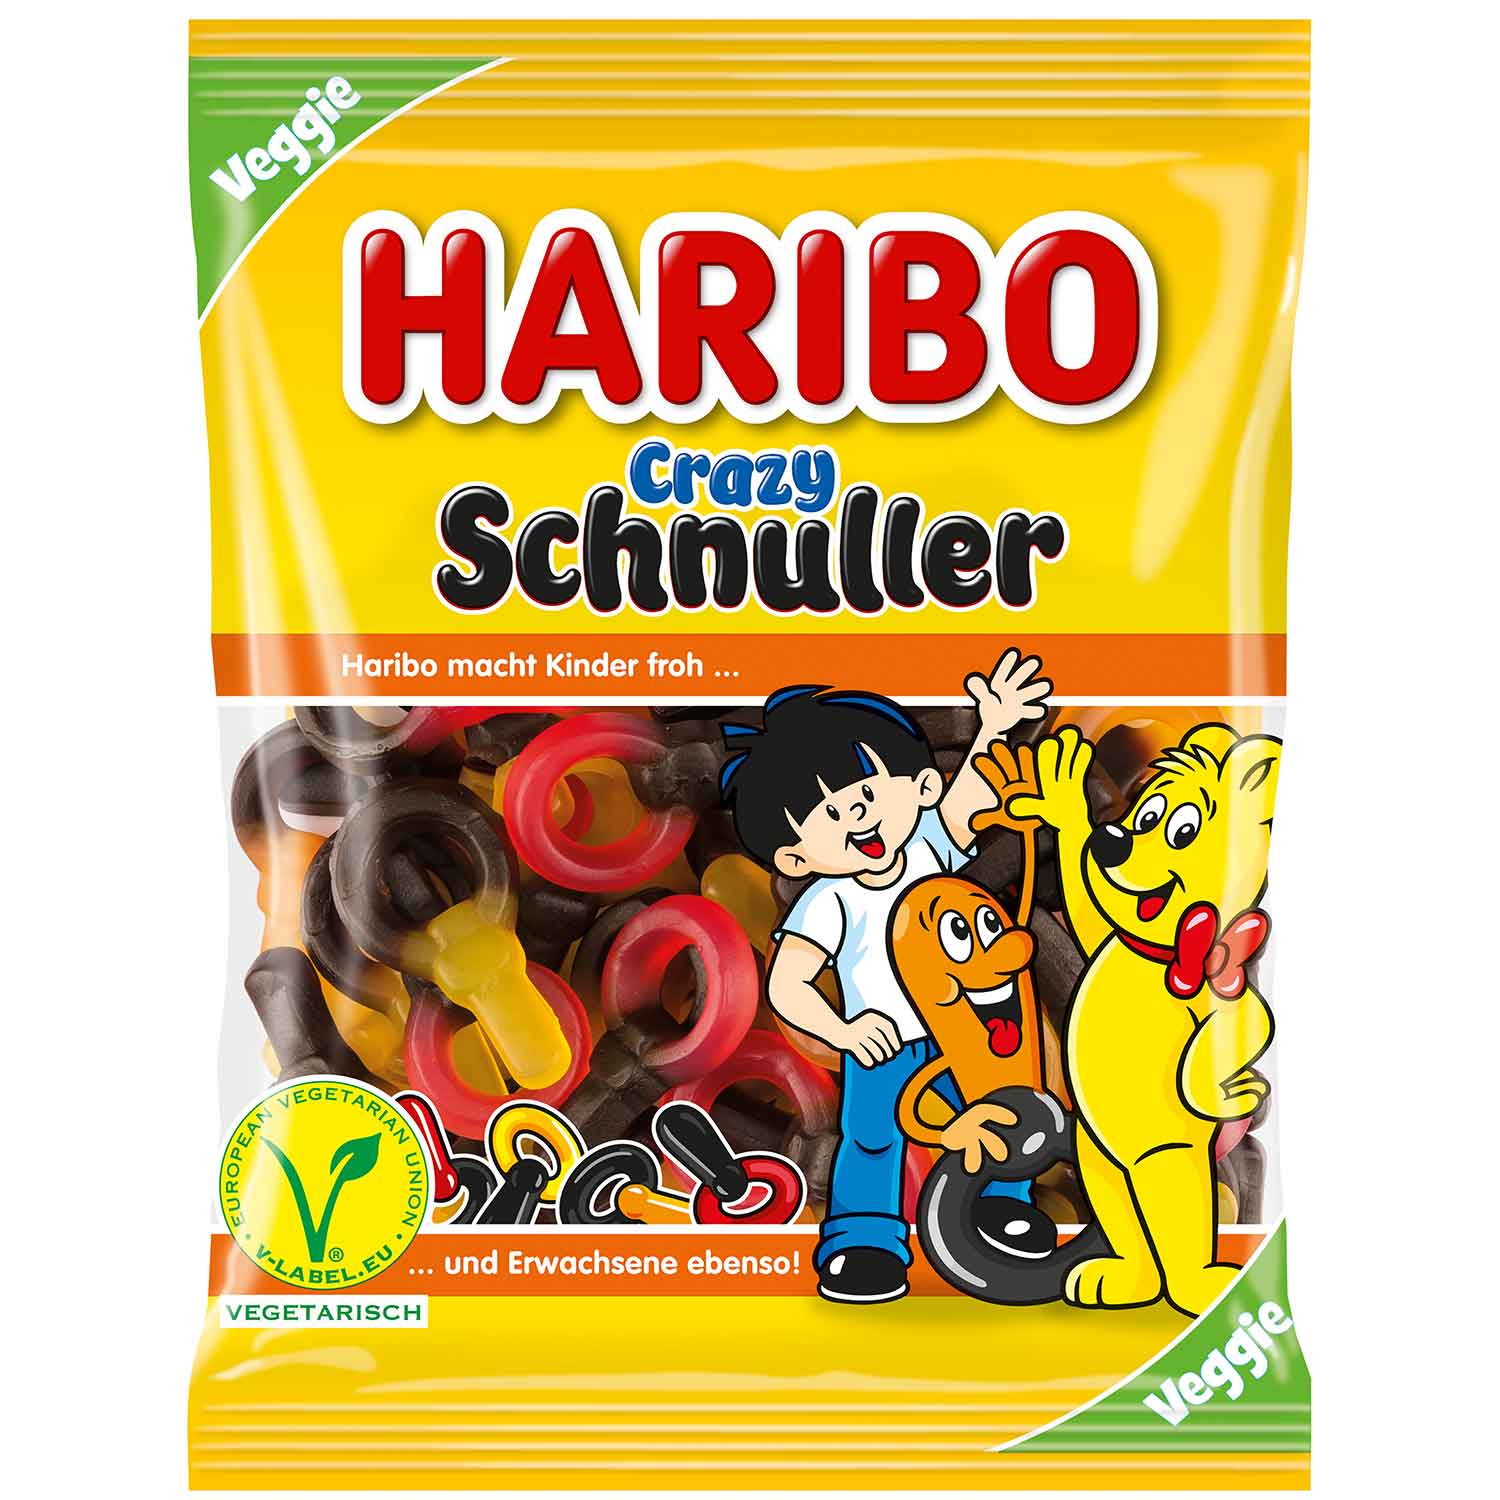 Haribo Crazy Schnuller 175g (Germany)